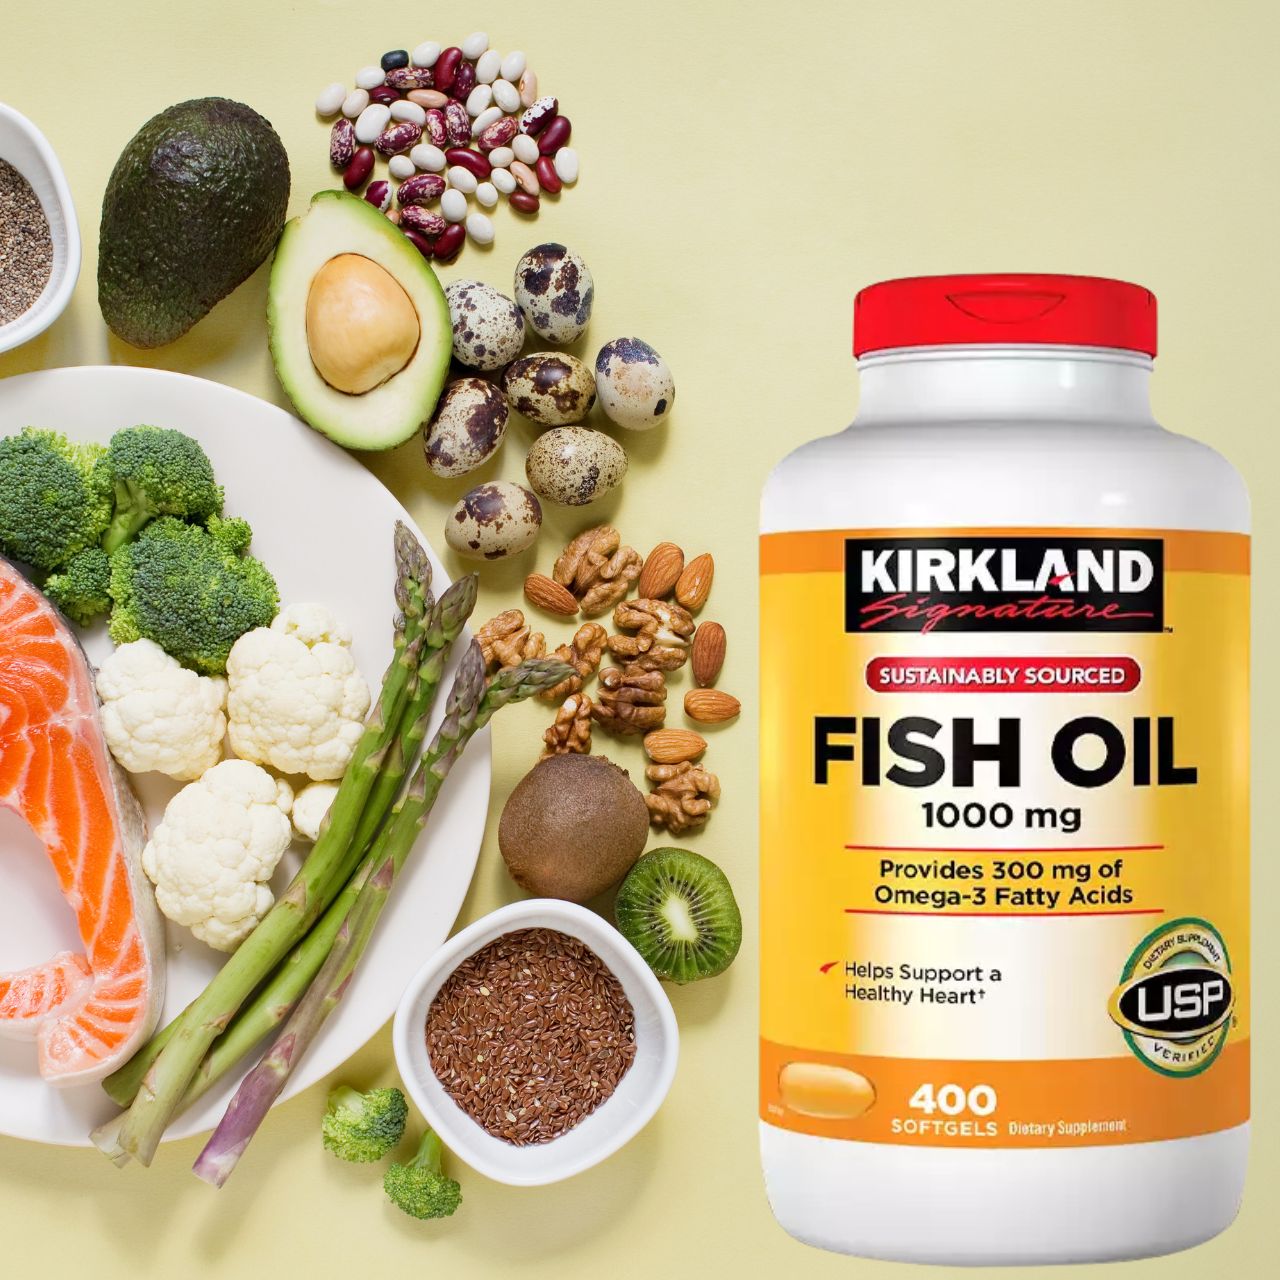 Dầu Cá Omega 3 Kirkland Signature Fish Oil Bổ não, bổ mắt, Hỗ trợ sức khỏe tim mạch, khớp - Massel Official